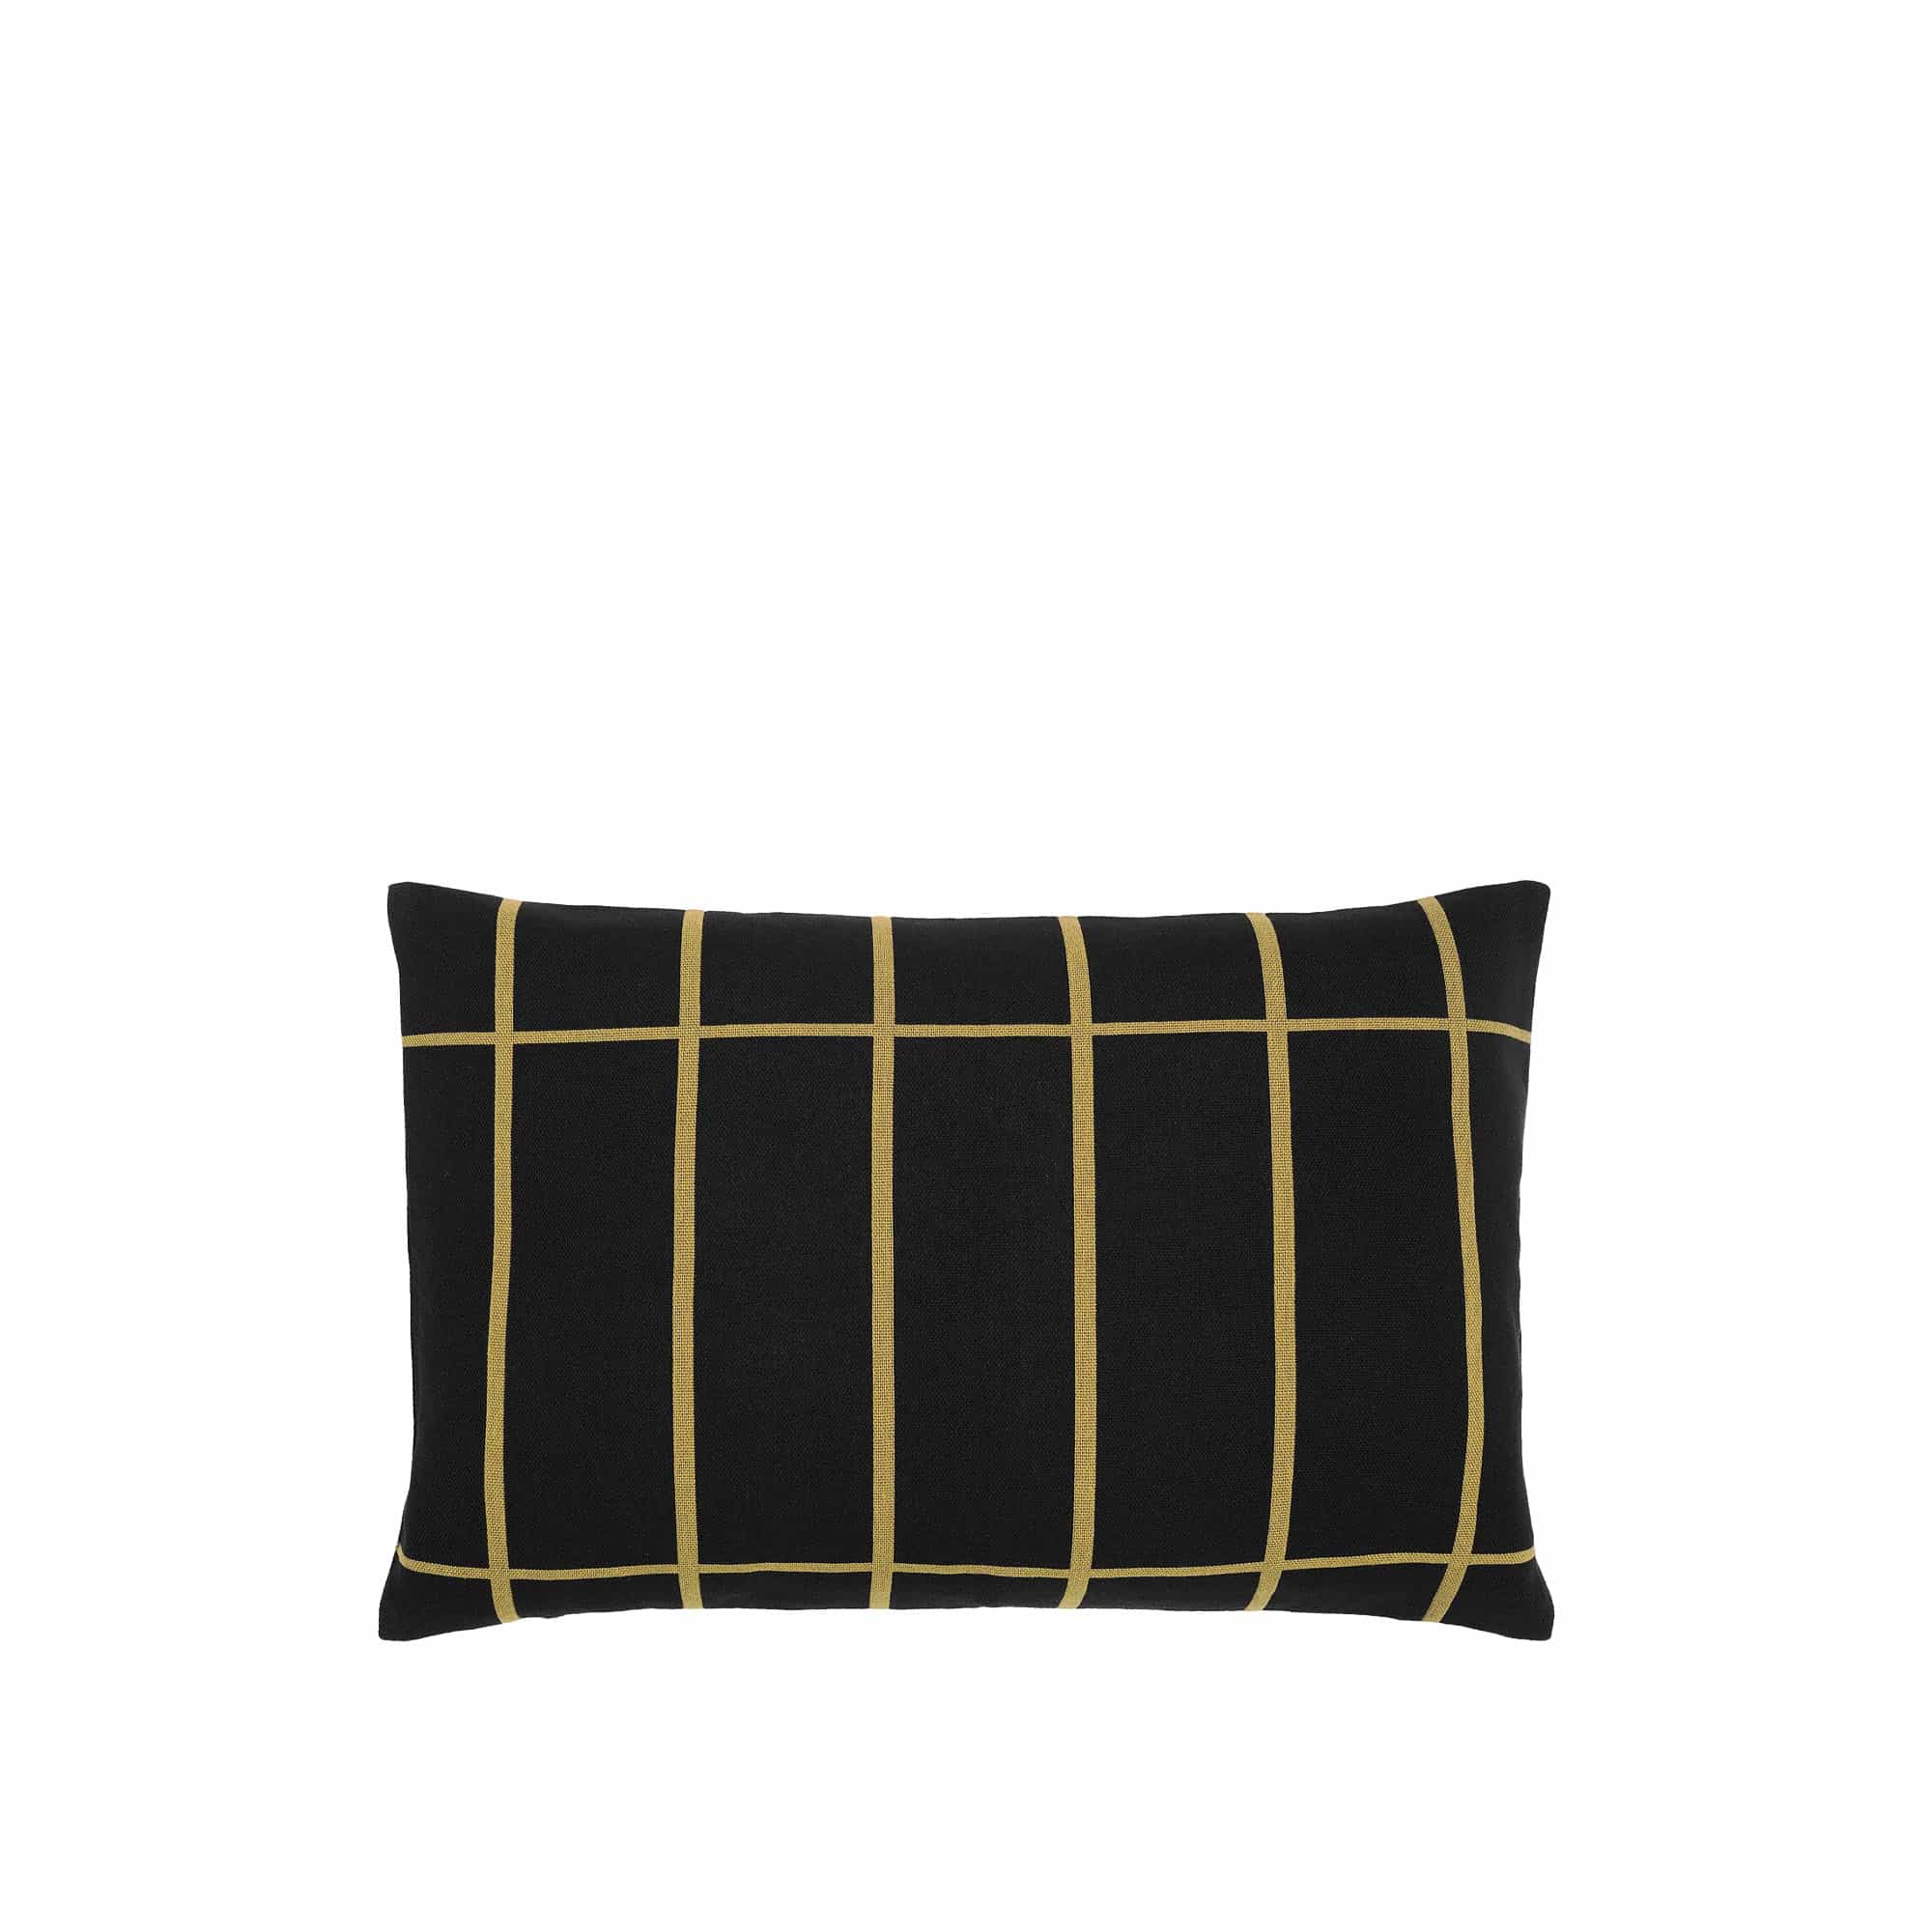 Tiiliskivi Cushion Cover 40X60 Caviar, Gold